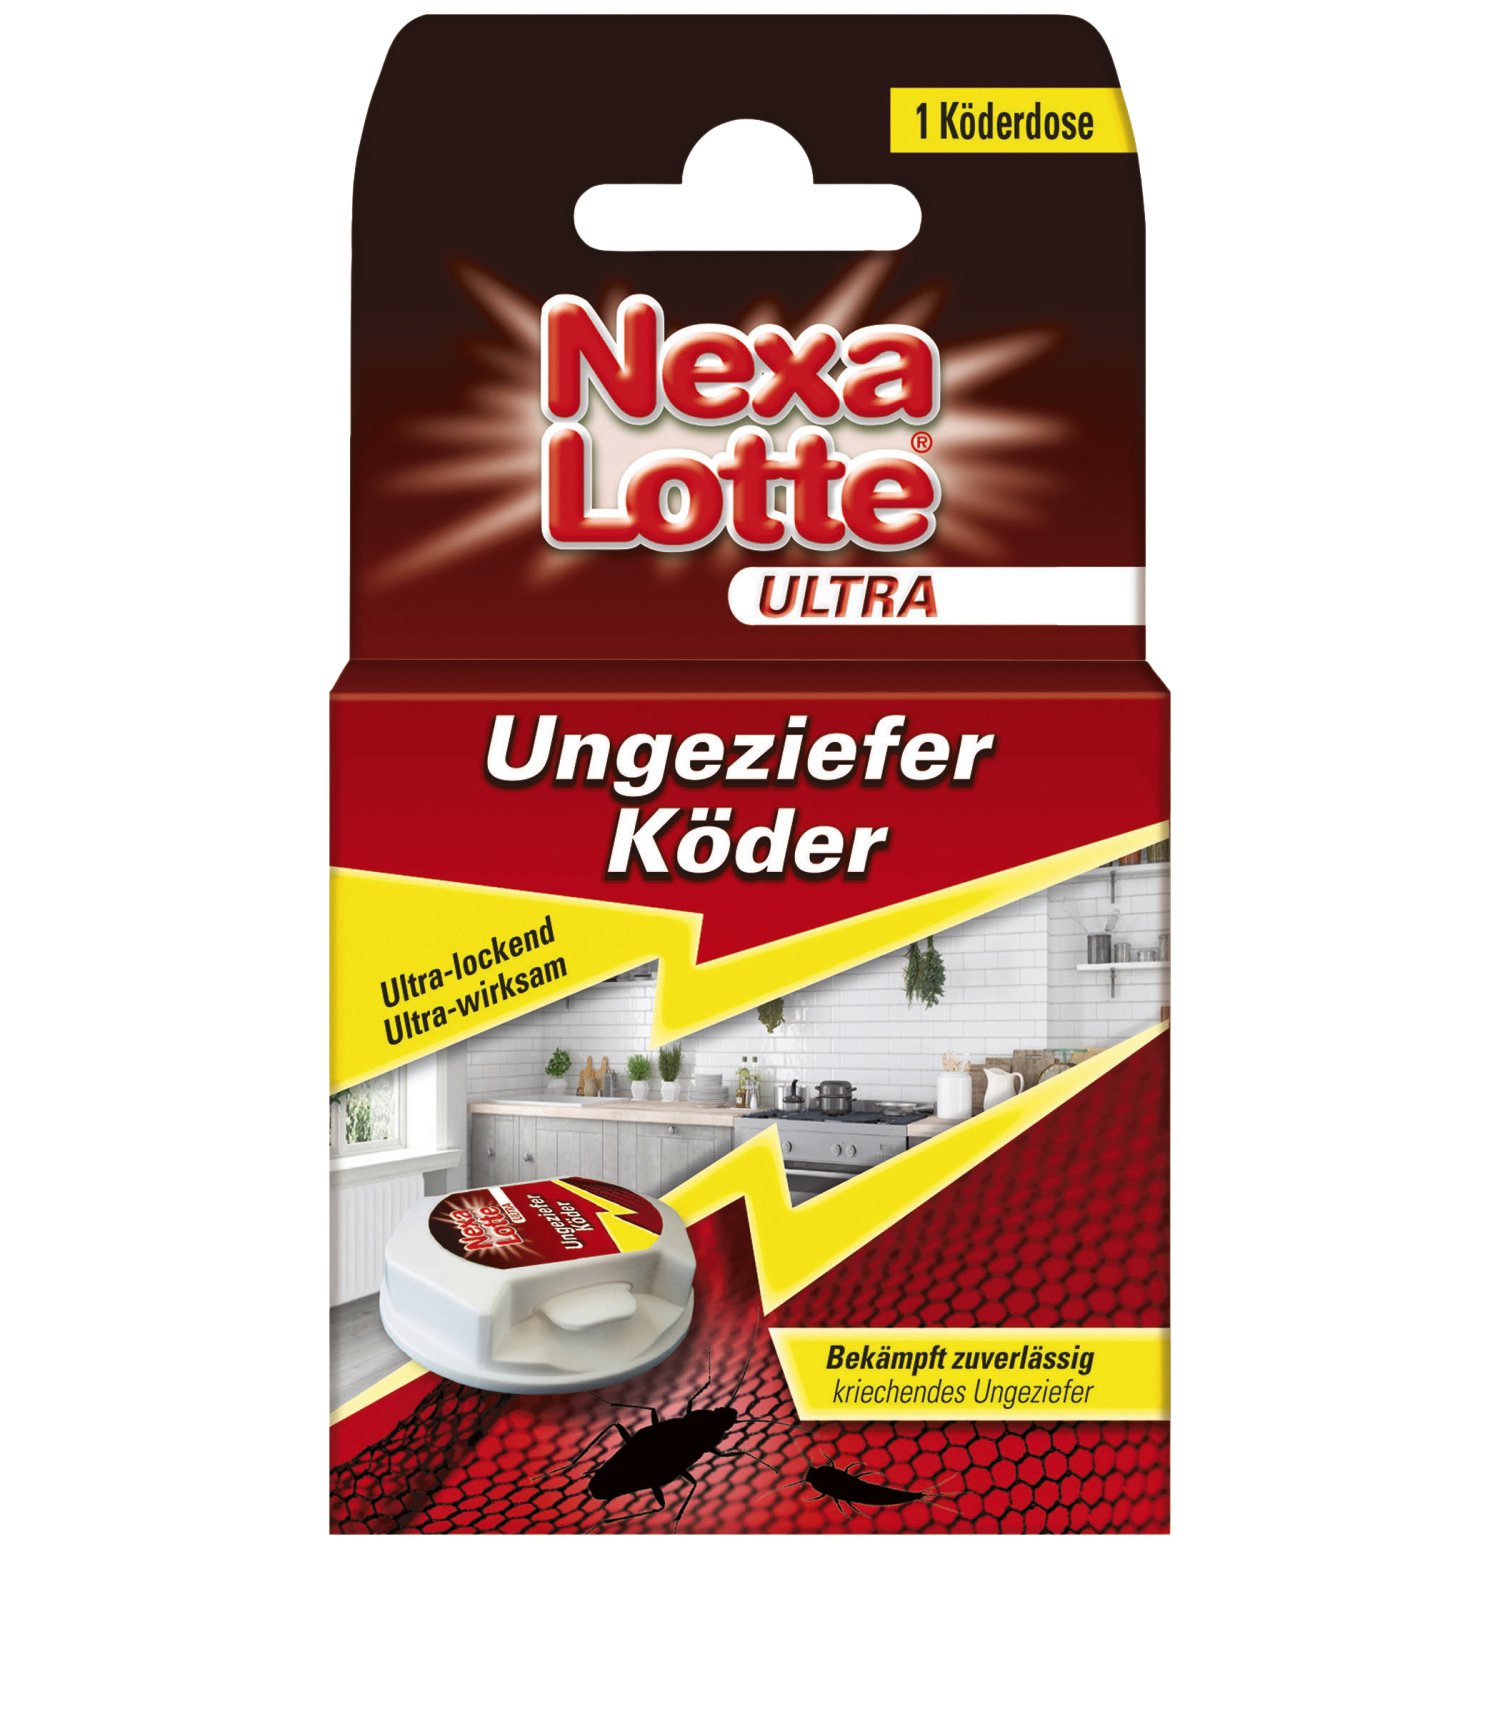 Nexa Lotte® ULTRA Ungeziefer-Köder 1 Stk.